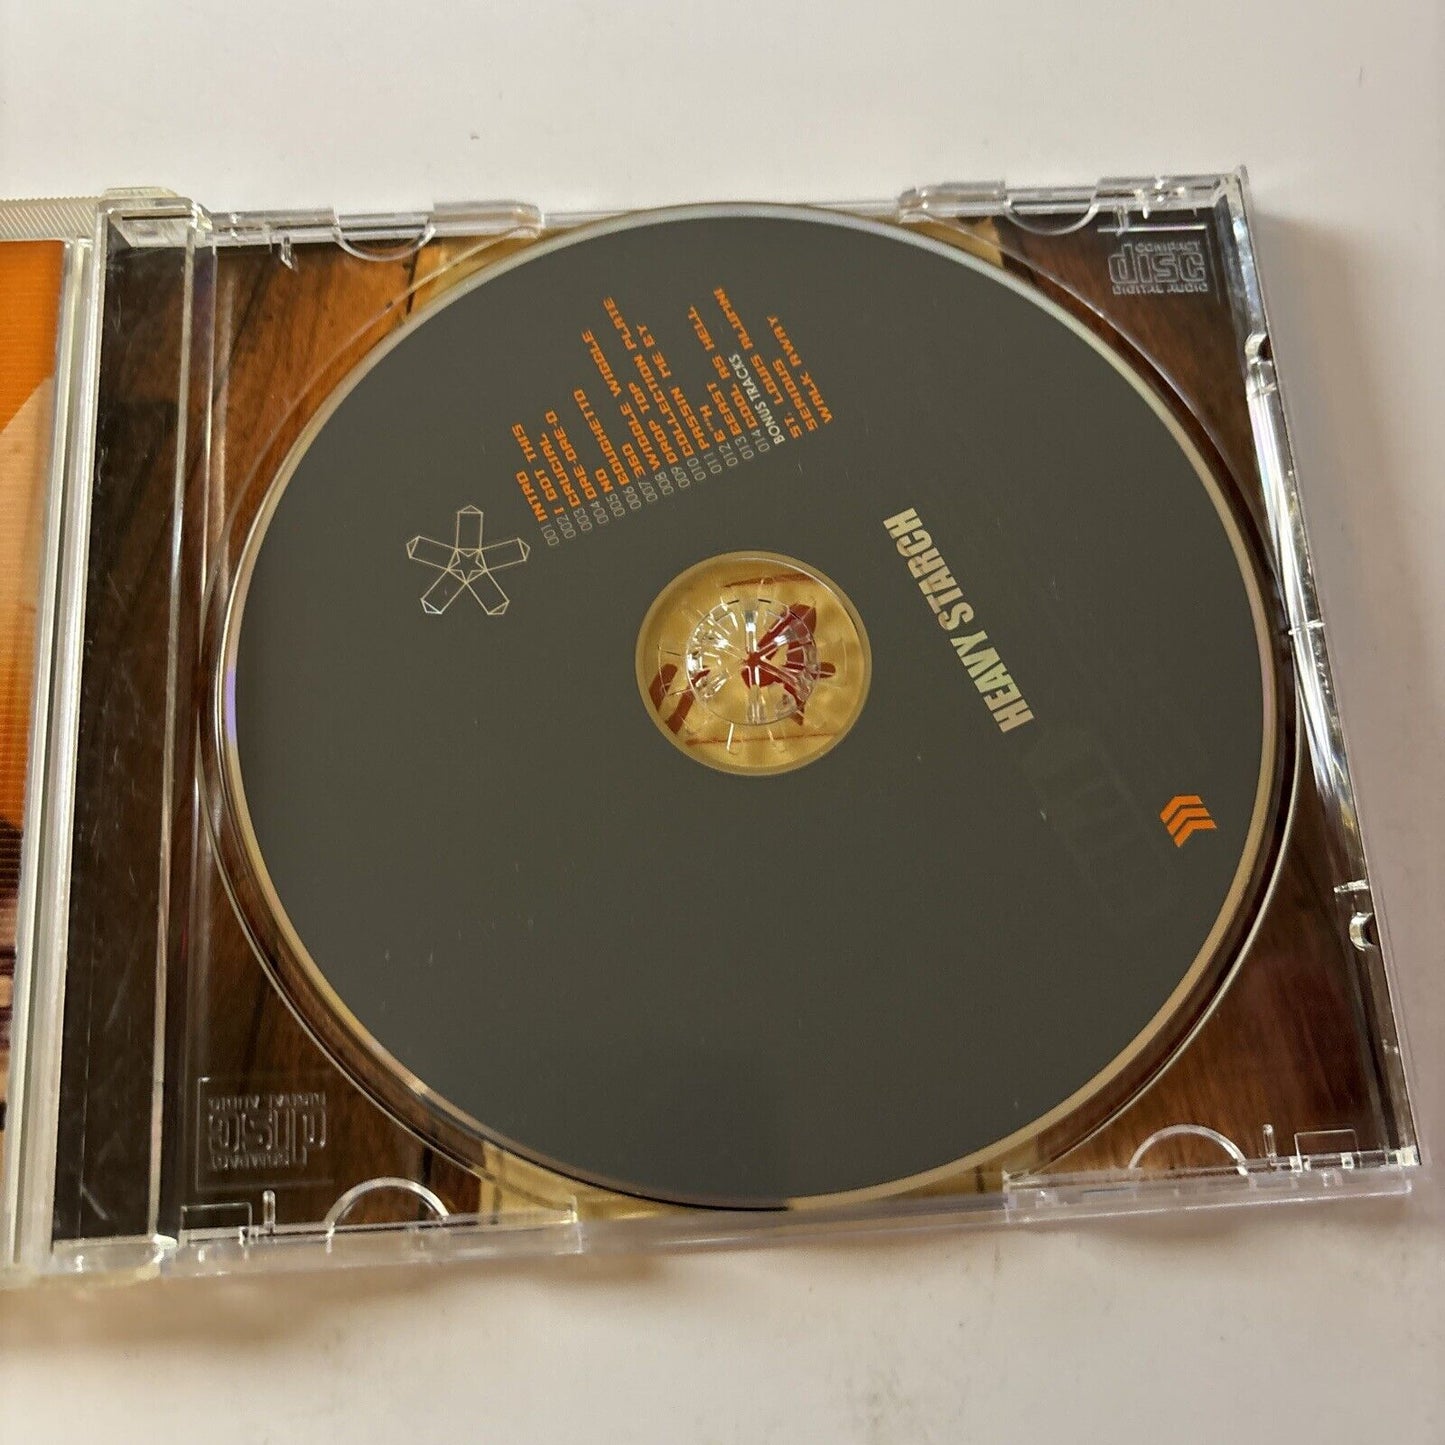 Ali - Heavy Starch [Bonus Tracks] (CD, 2002)